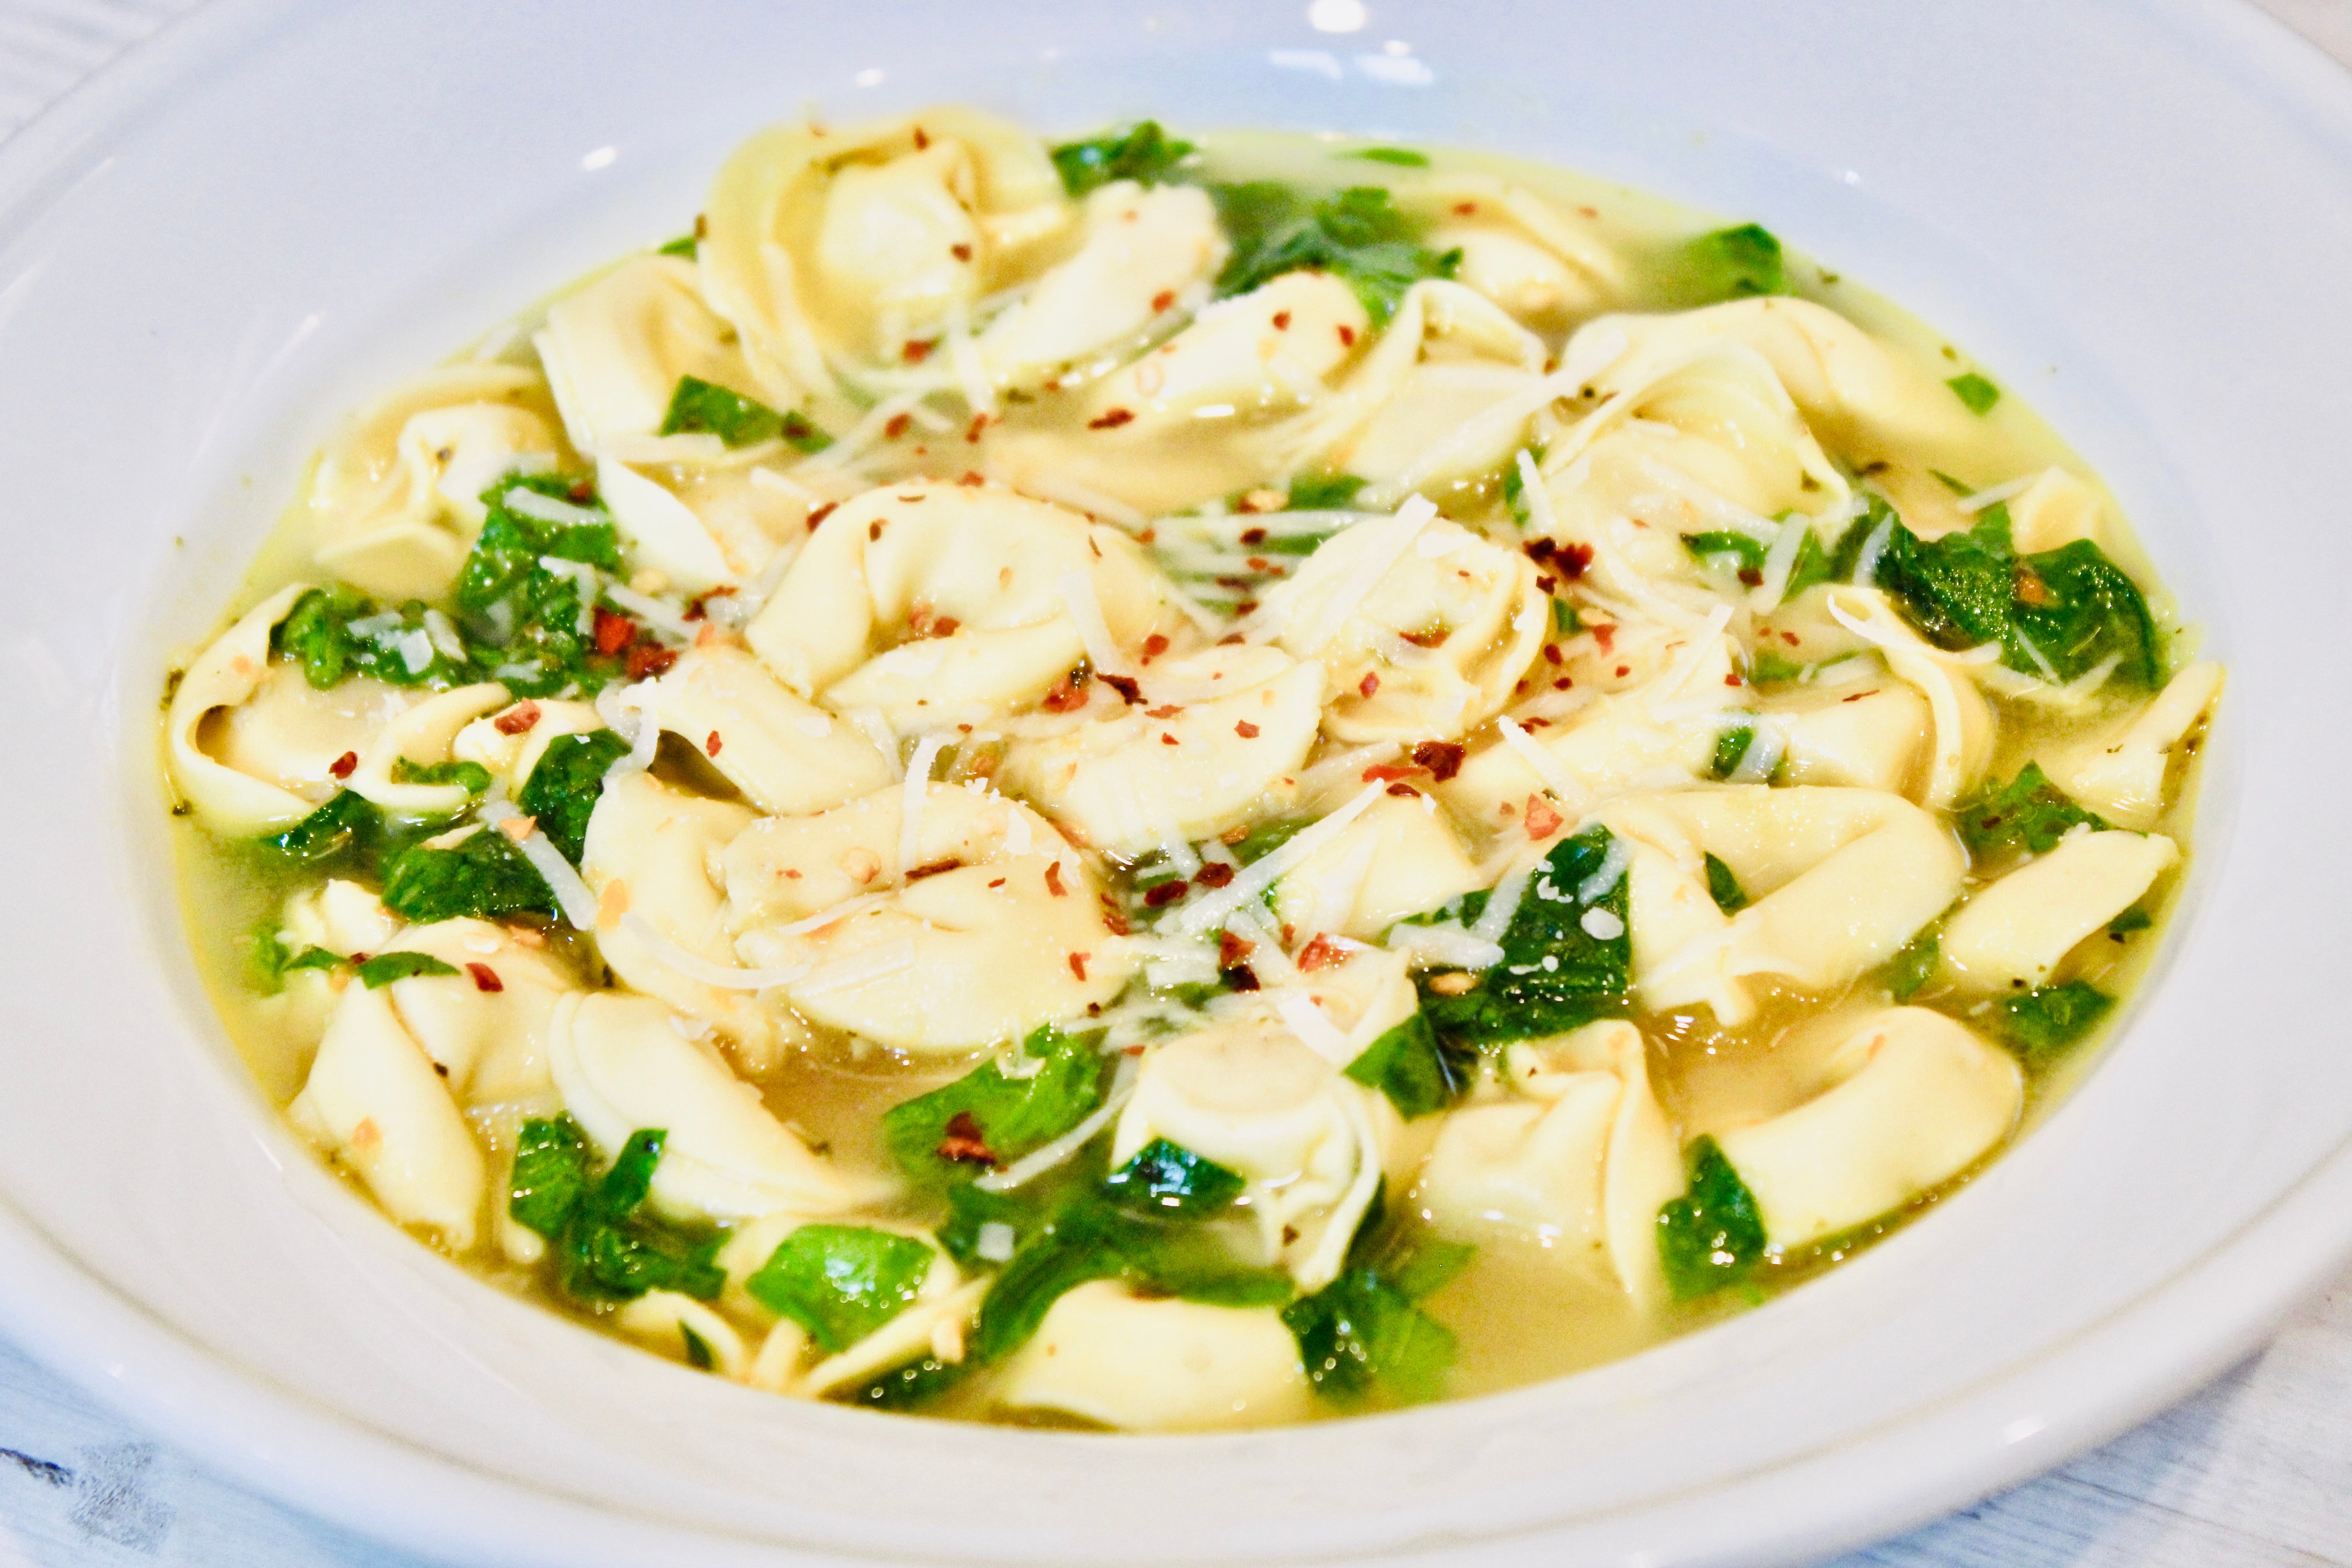 Vegan Tortellini & Spinach en Brodo - A classic Italian soup of tortellini and spinach en brodo "in broth" in 30 minutes! via @thiswifecooks